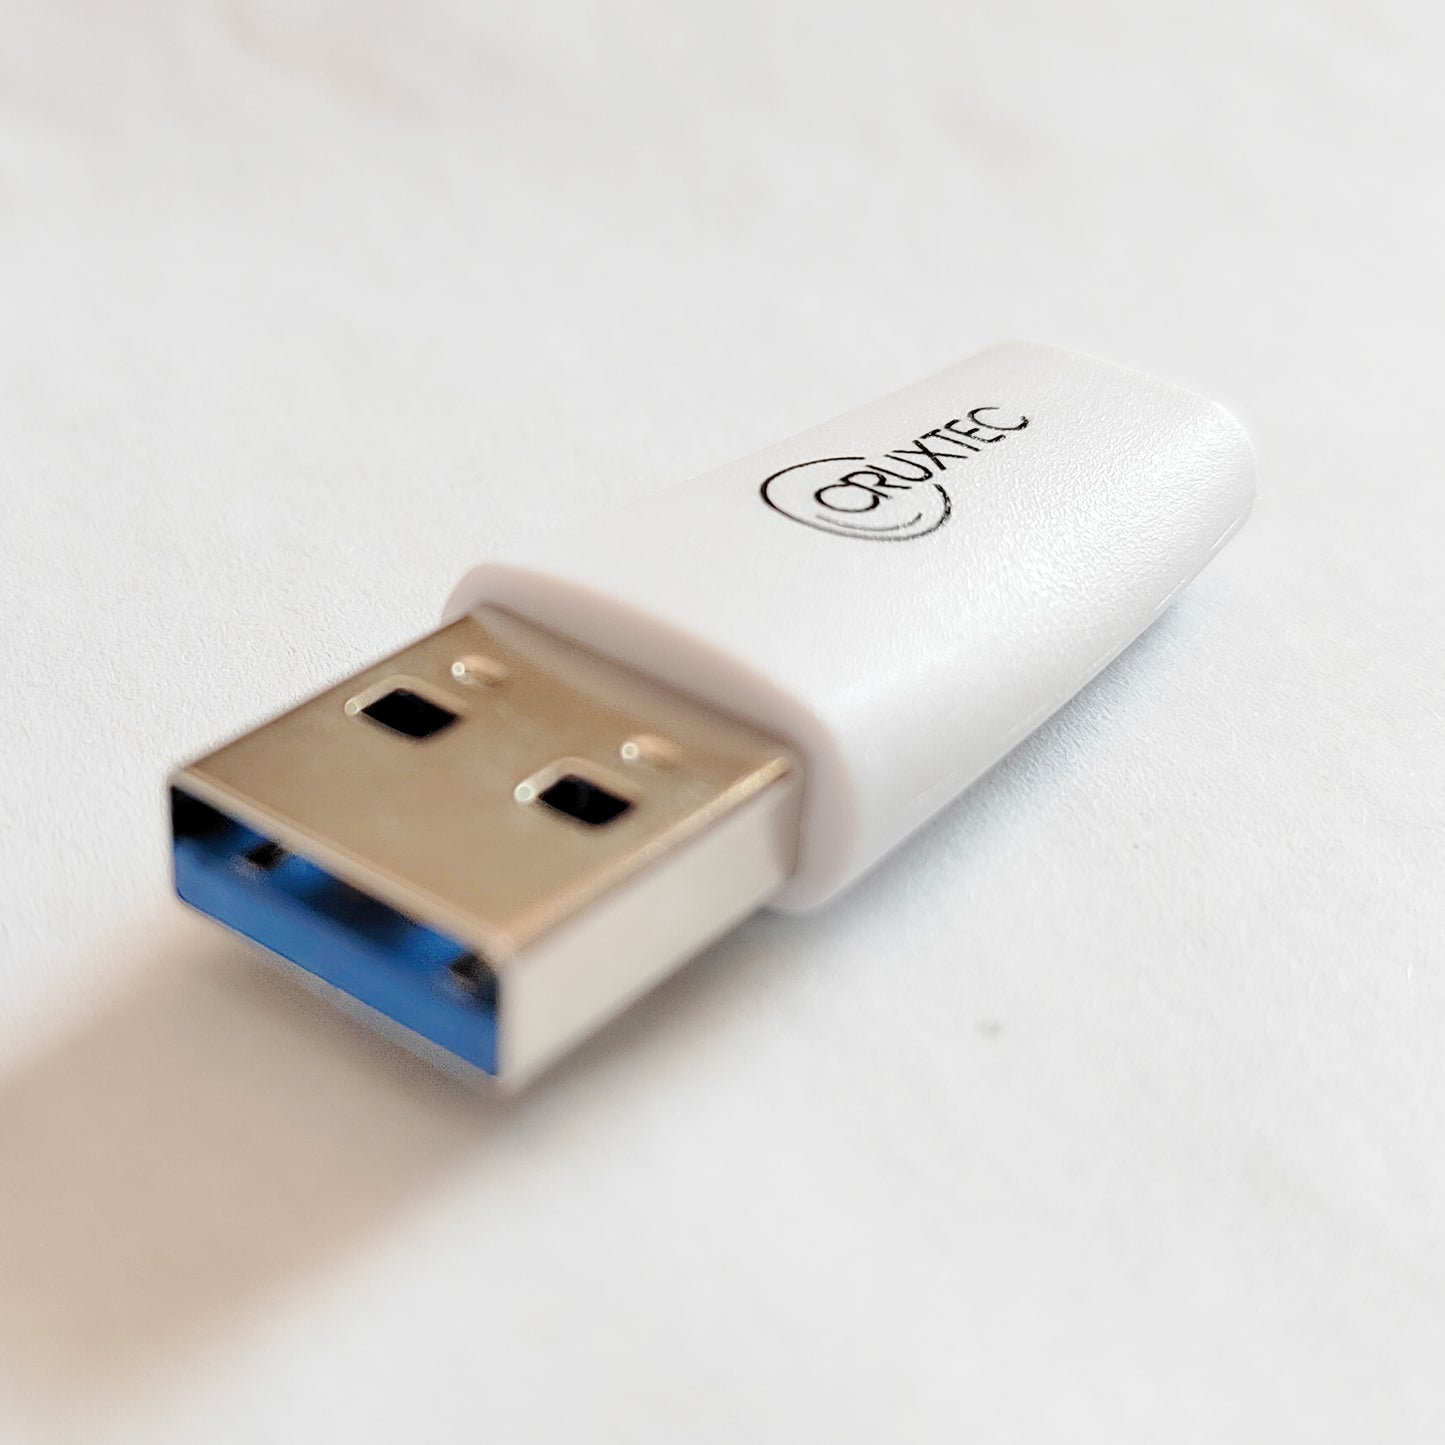 Cruxtec USB-A Male to USB-C Female Adapter